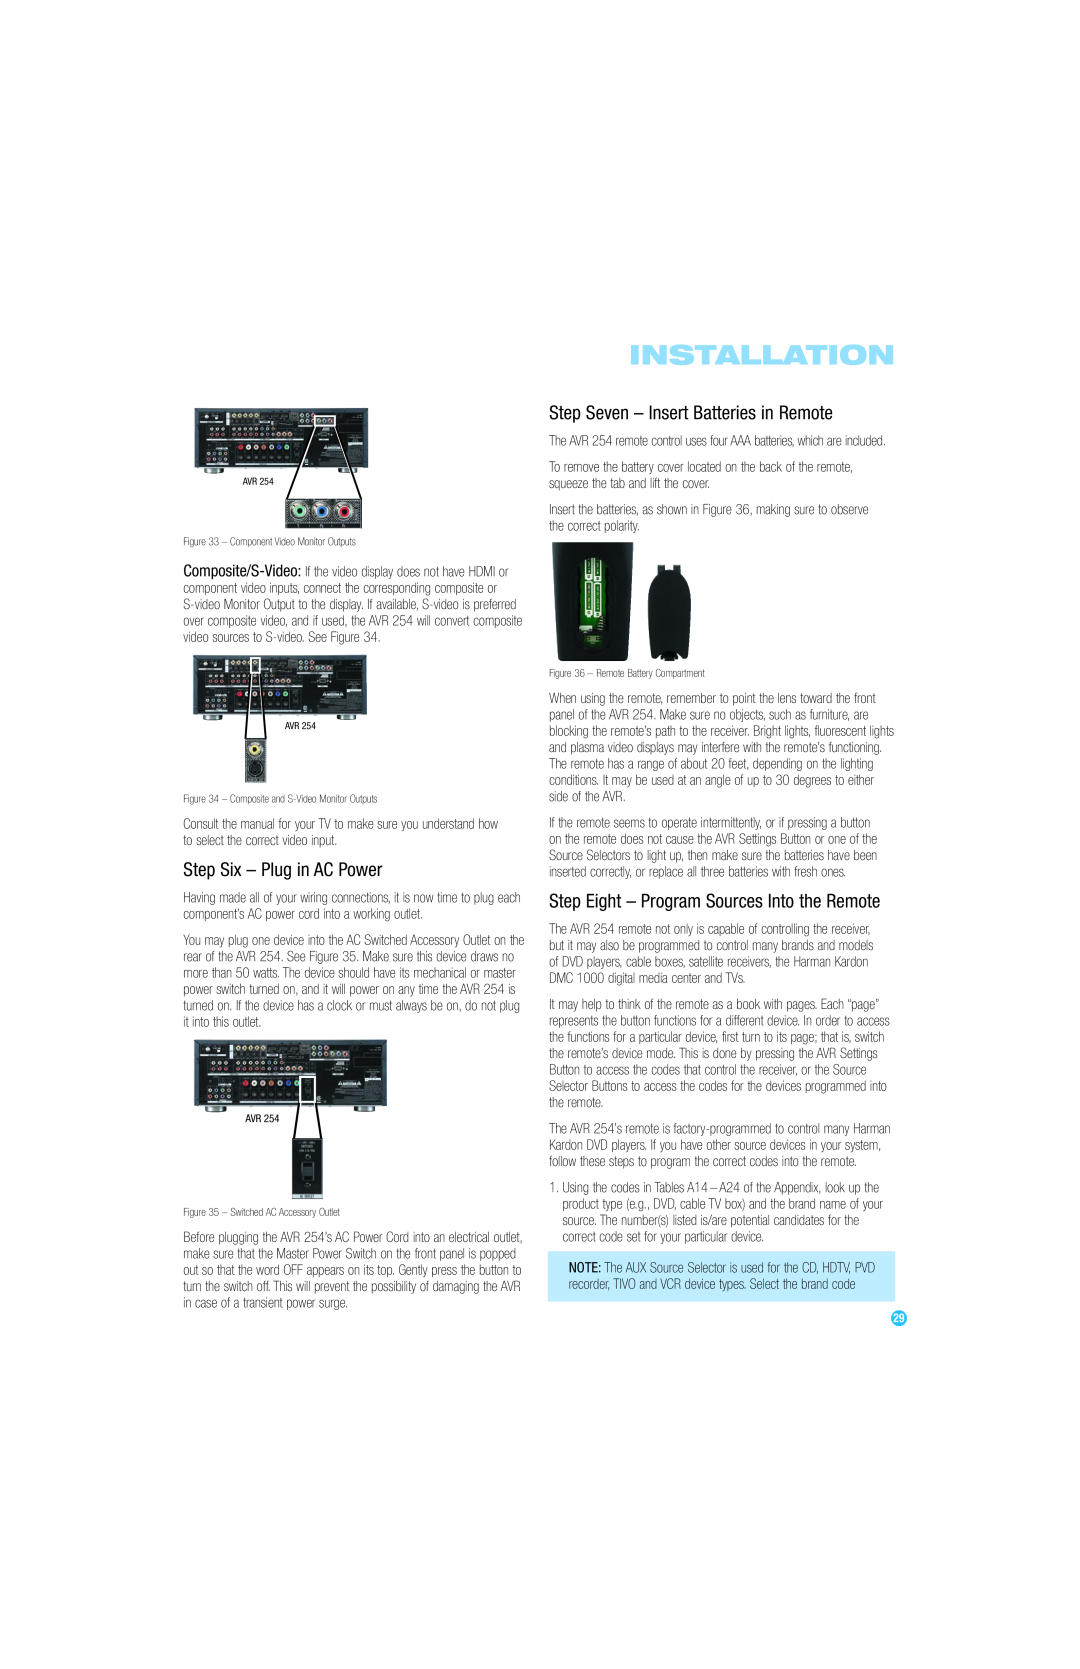 Harman-Kardon AVR 254 owner manual Step Seven - Insert Batteries in Remote, Step Six - Plug in AC Power, Installation 